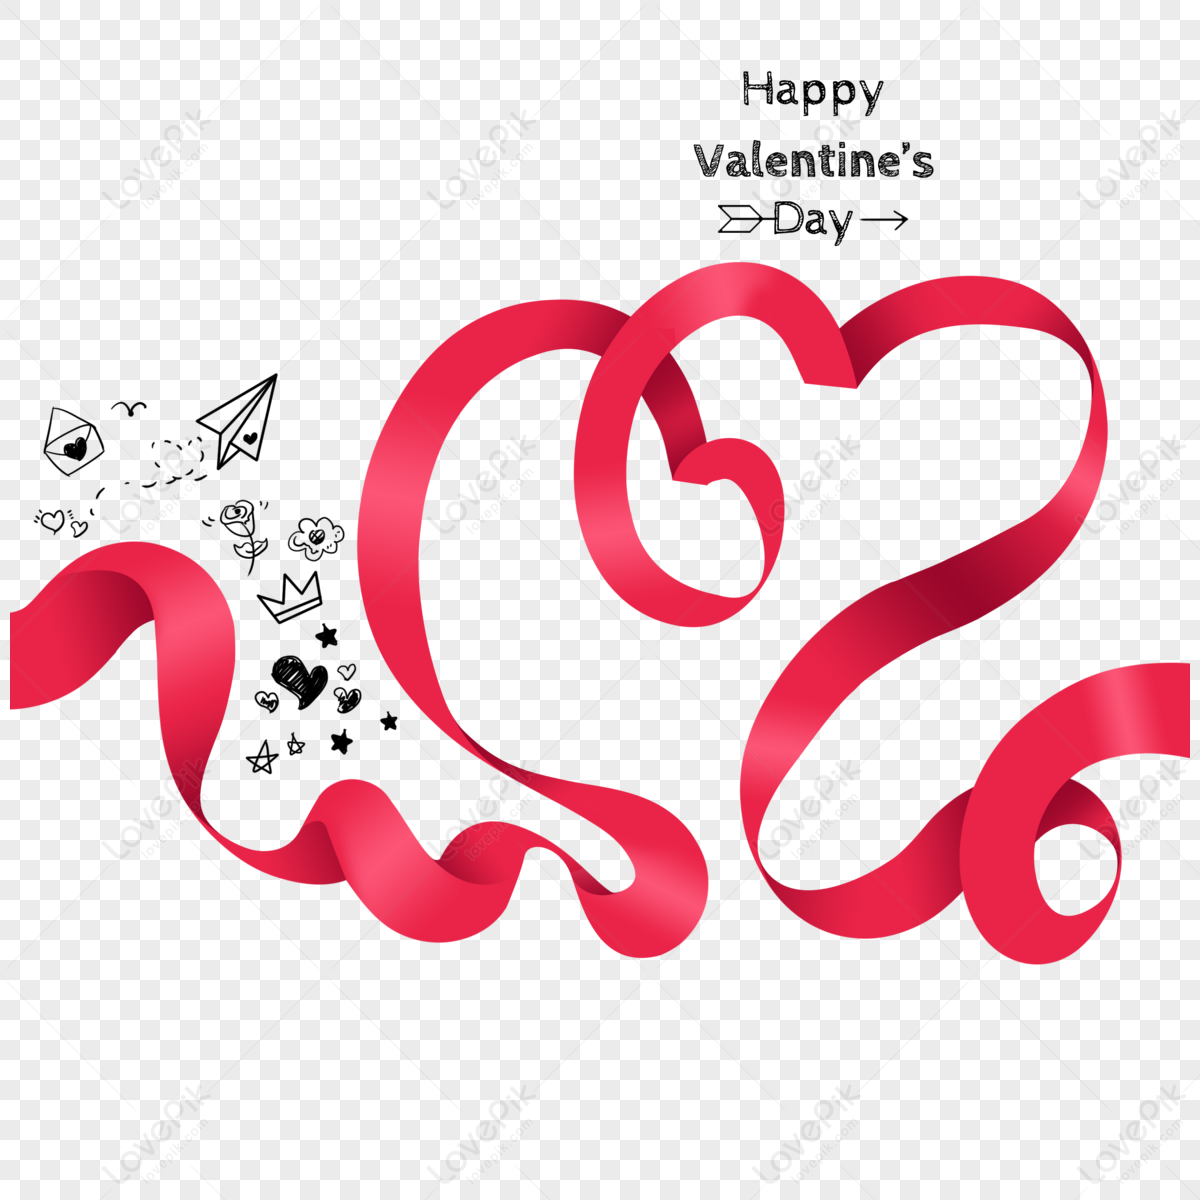 Free Valentines Day Ribbon Vector - Download in Illustrator, EPS, SVG, JPG,  PNG